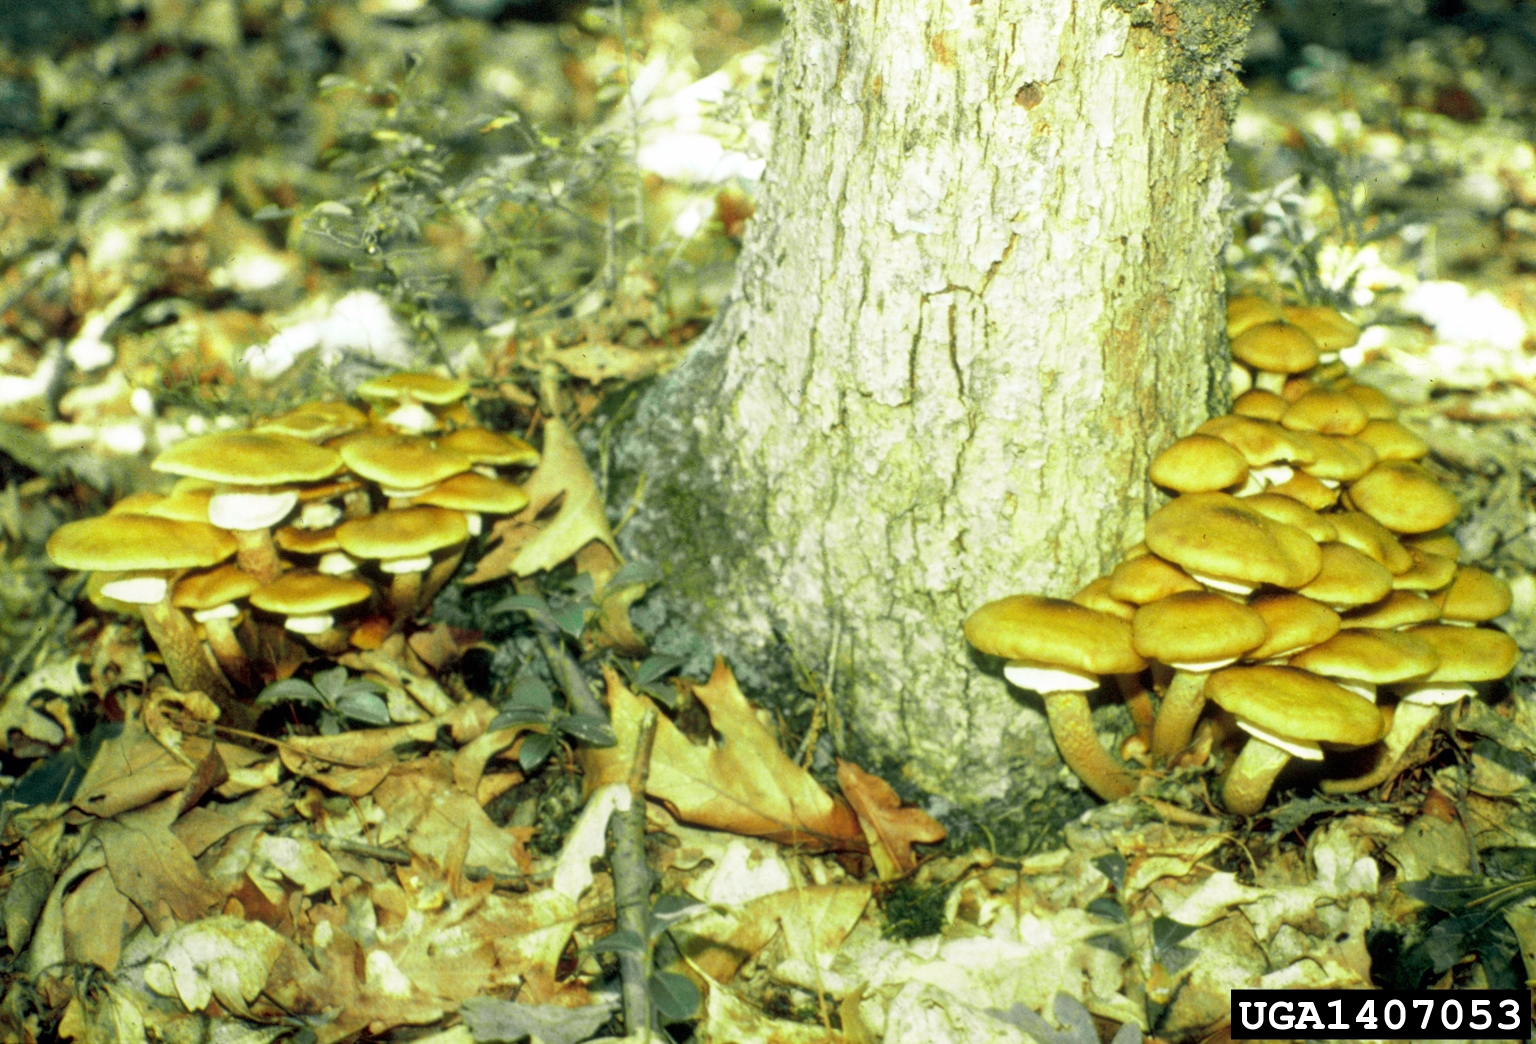 Mushrooms of armillaria root rot